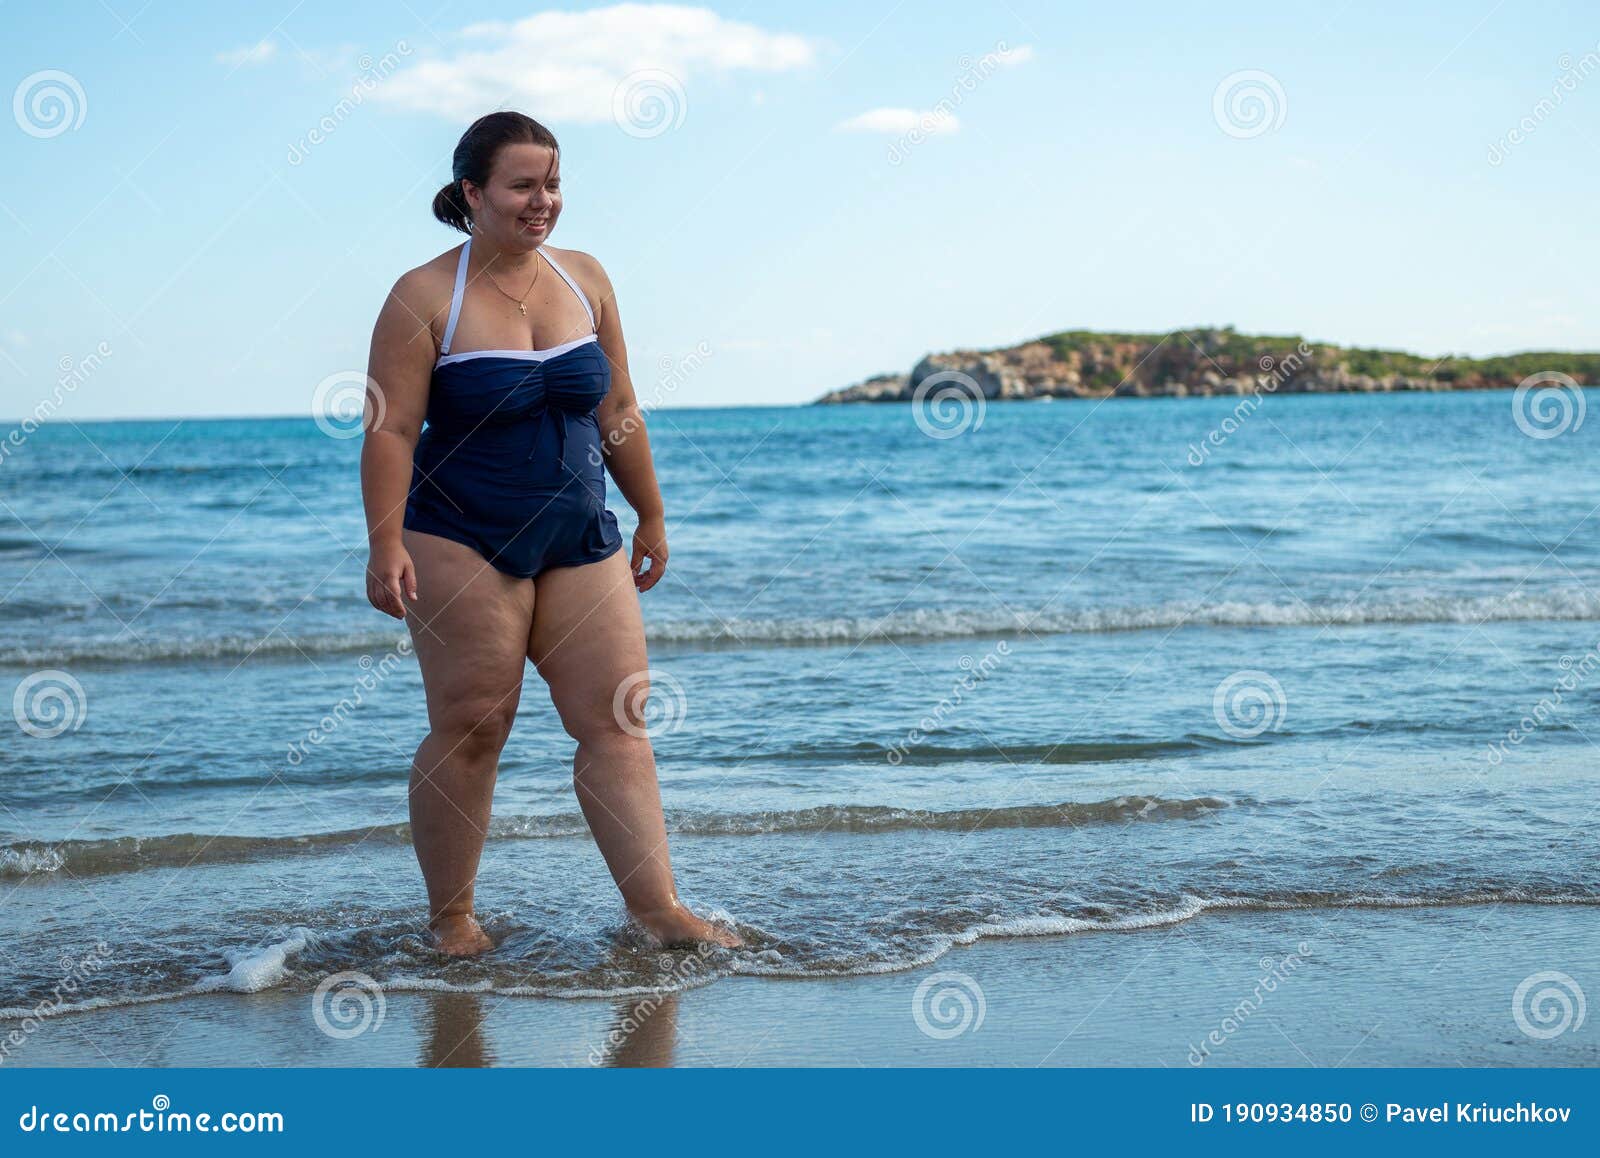 Big Tits Women Beach